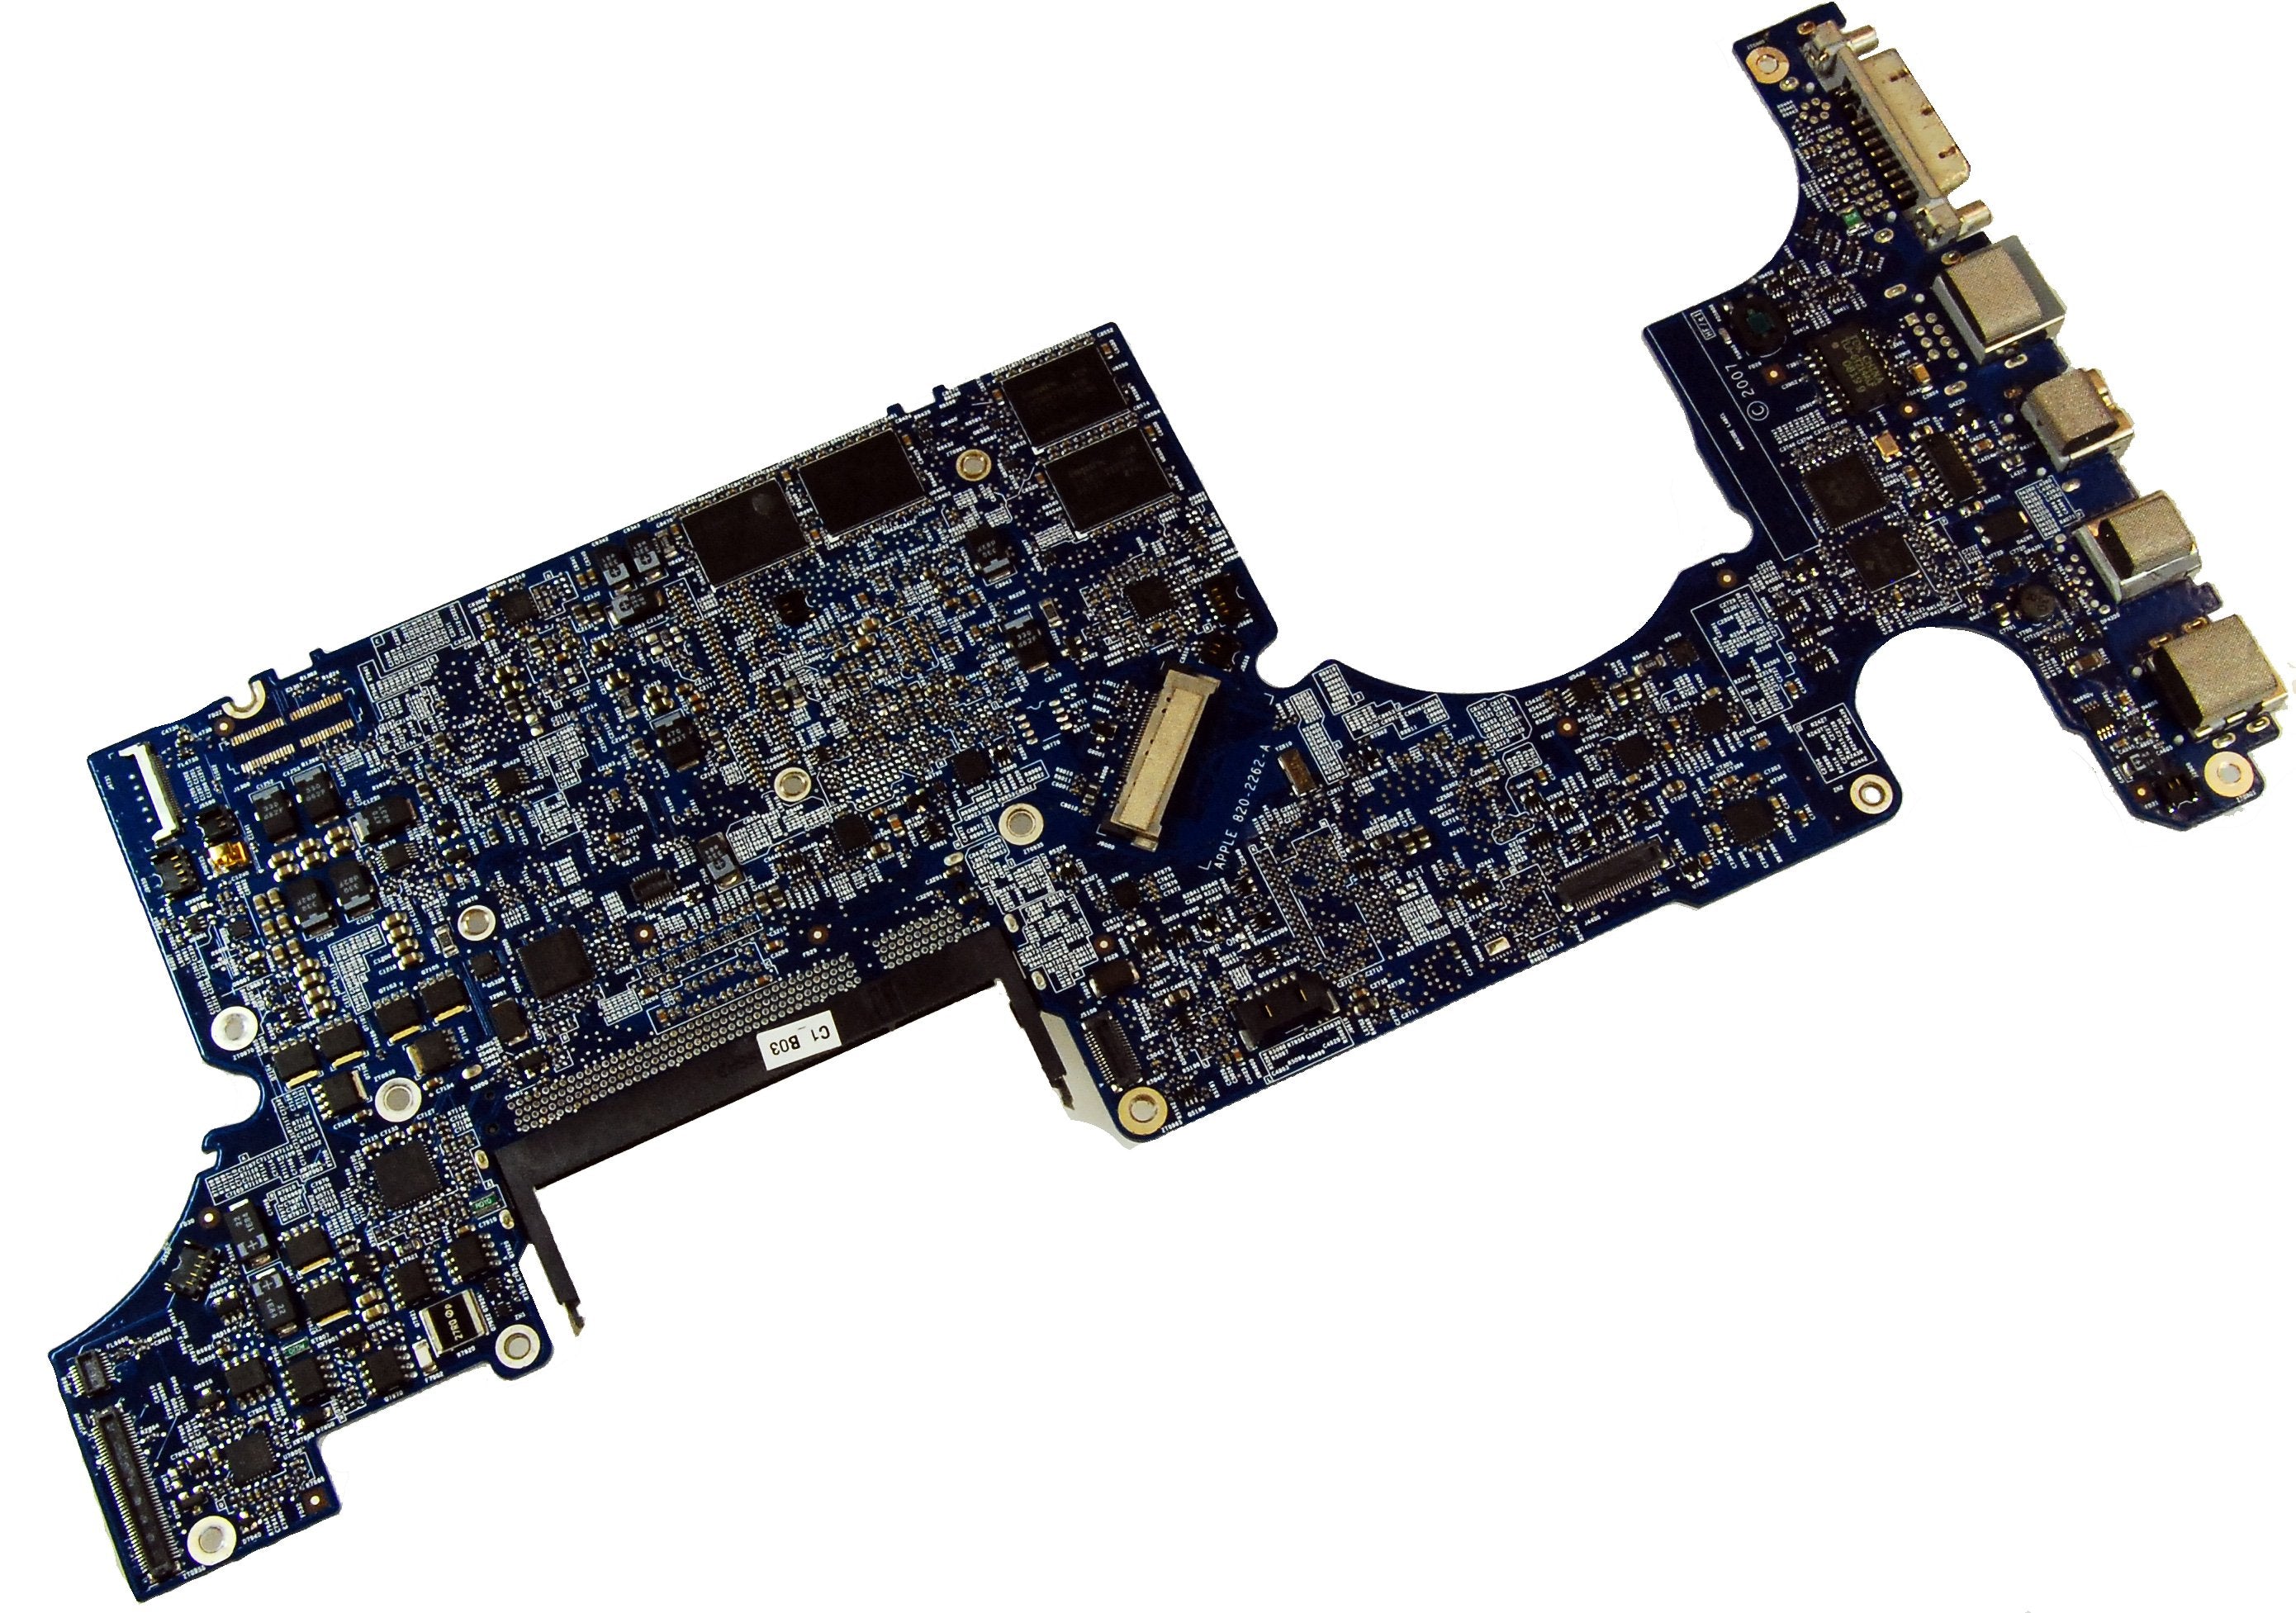 MacBook Pro 17" (Model A1212) 2.33 GHz Logic Board